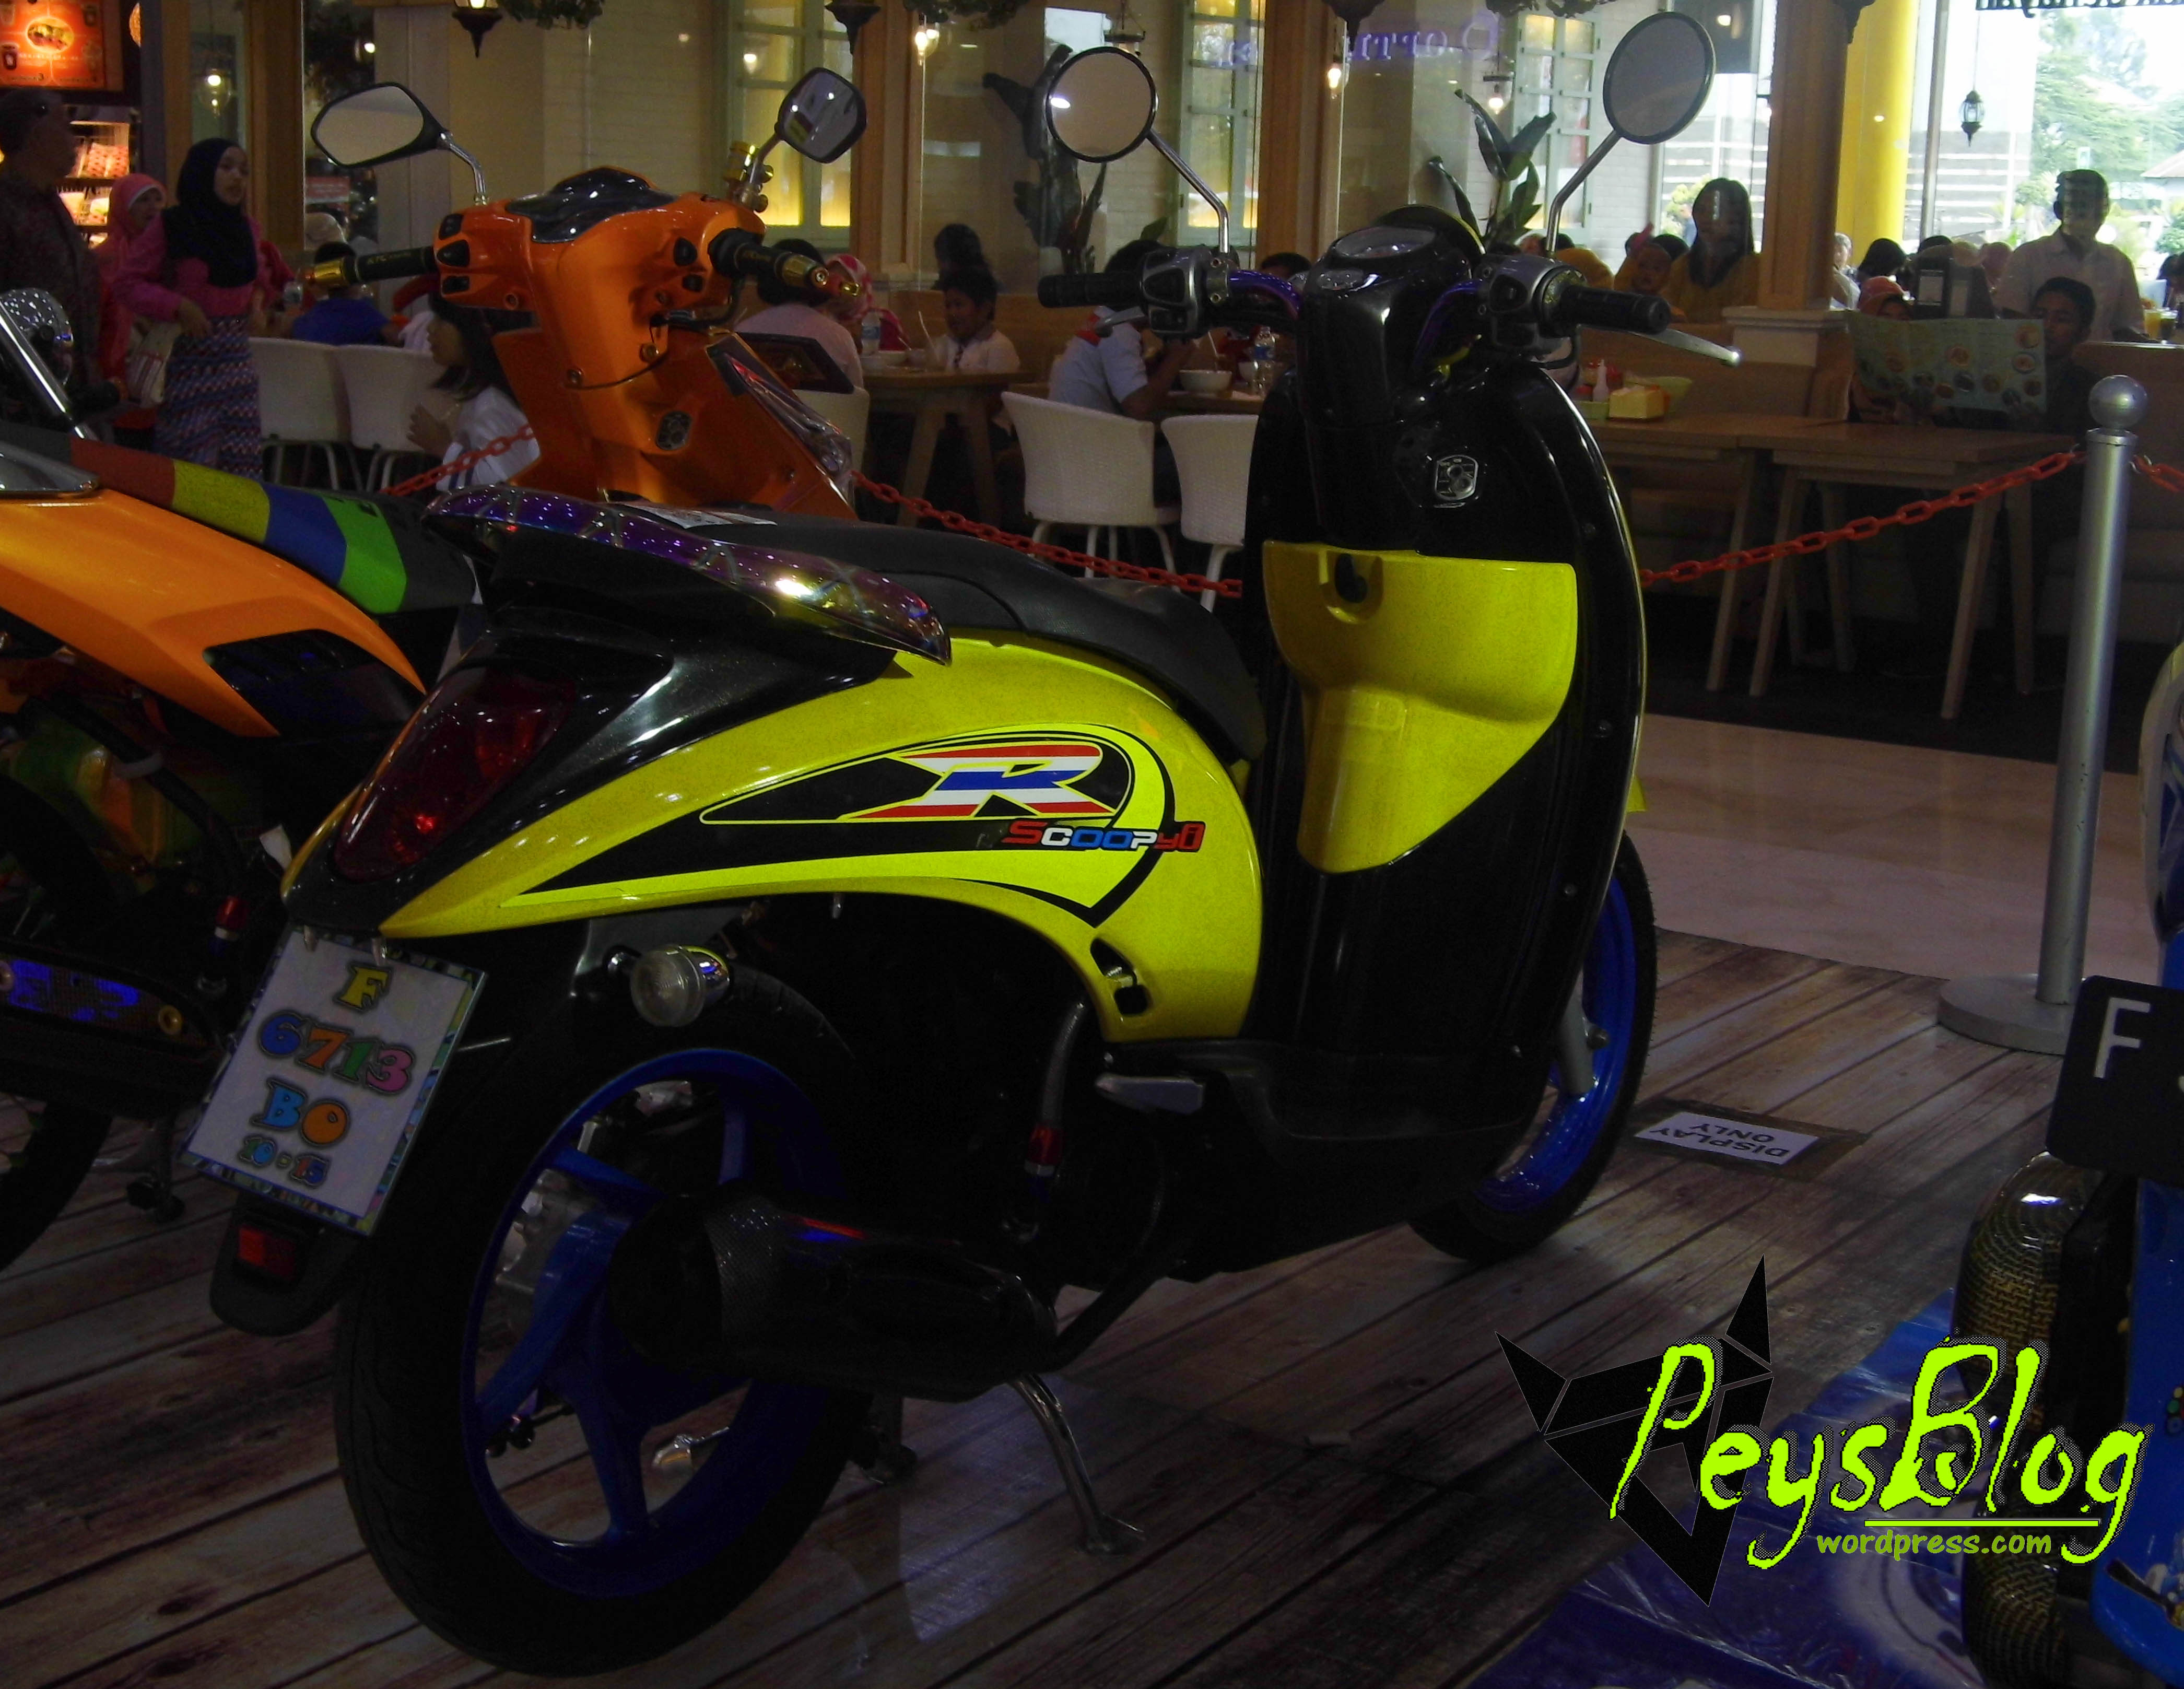 Wooooowww Mega Galeri Honda Modif Contest Seri Jawa Barat PEYSBLOG